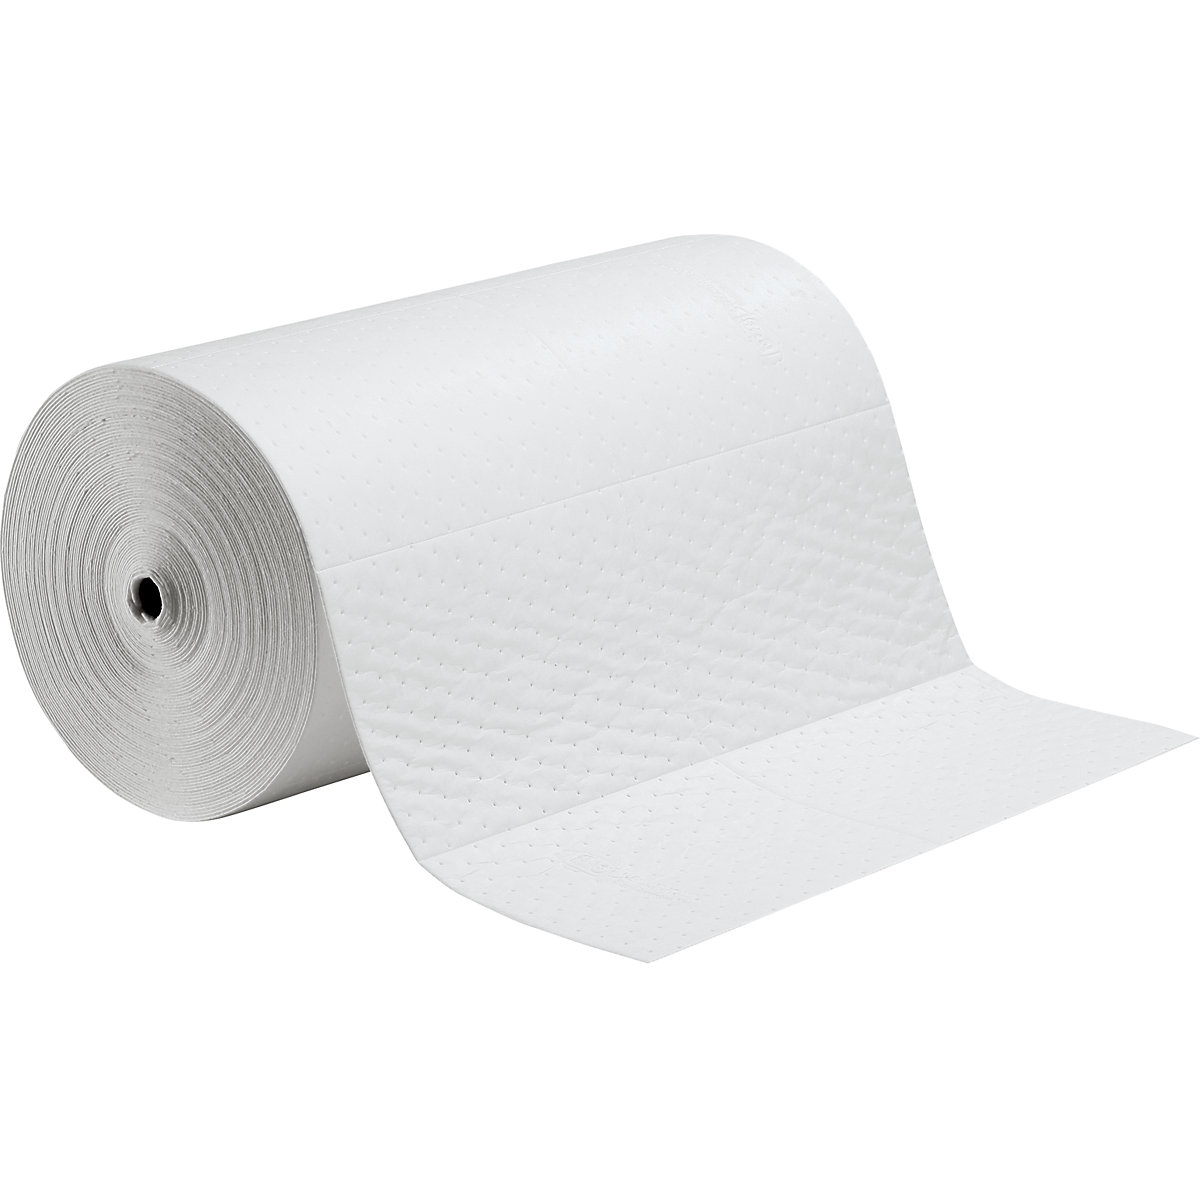 STAT-MAT® absorbent sheeting roll - PIG